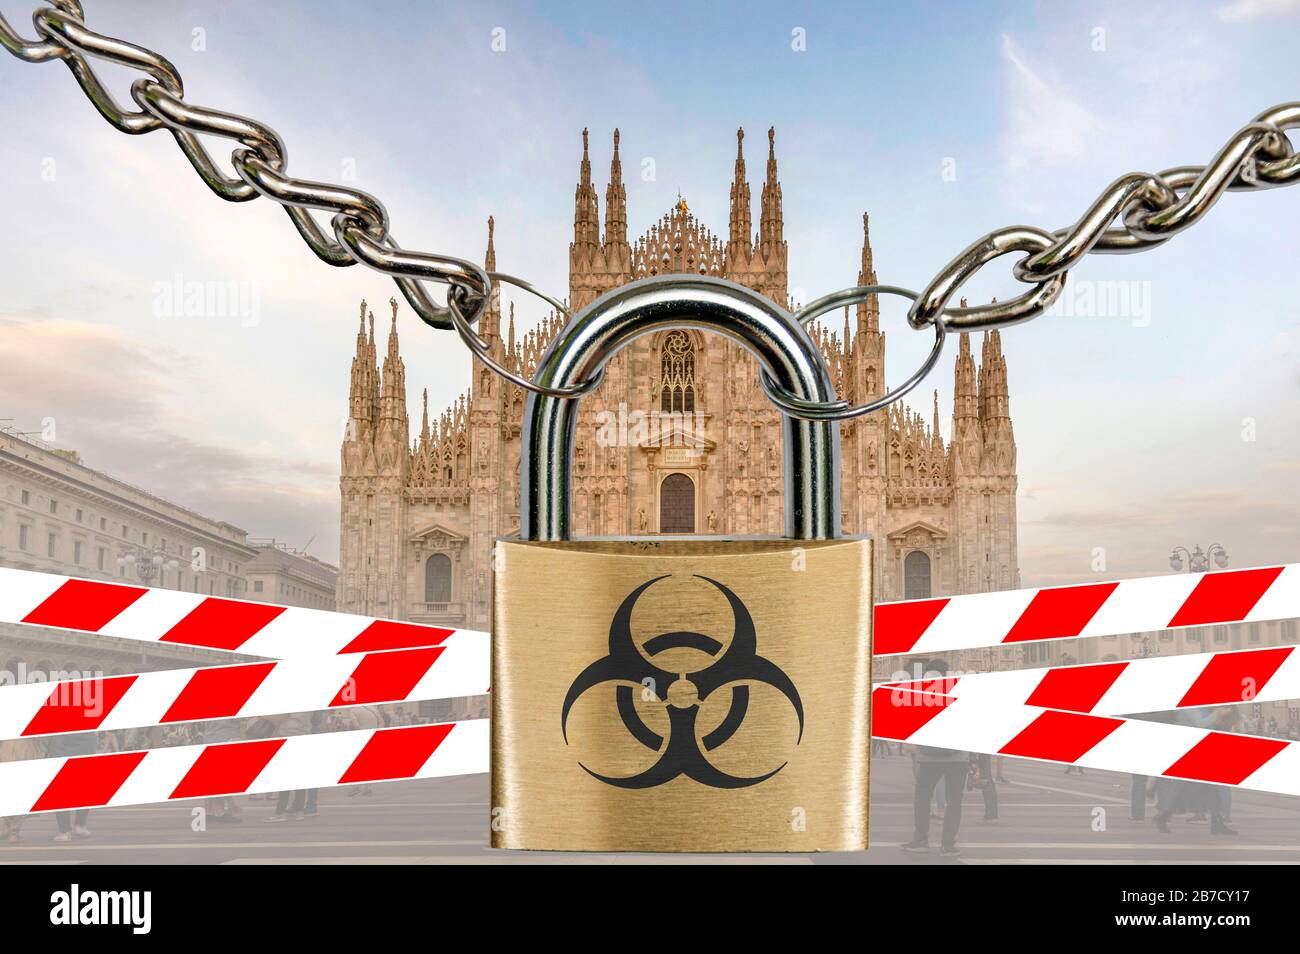 Montage: Italy blocked due to corona virus Stock Photo